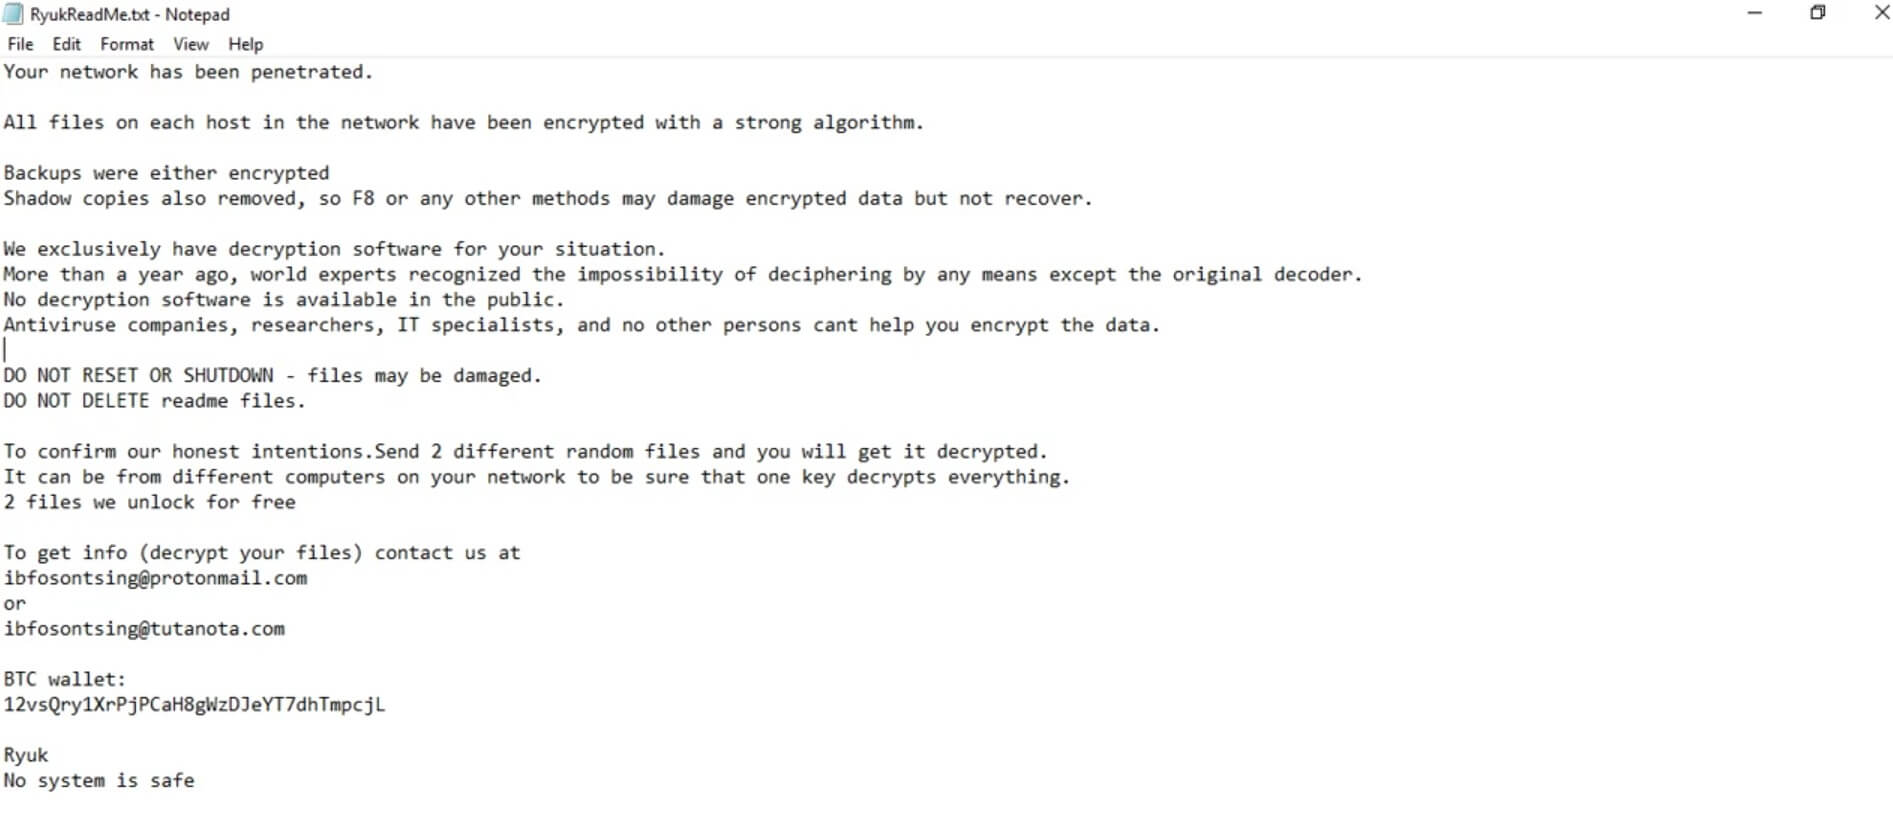 ryuk virus ransomware RYK l'extension rançon message de note